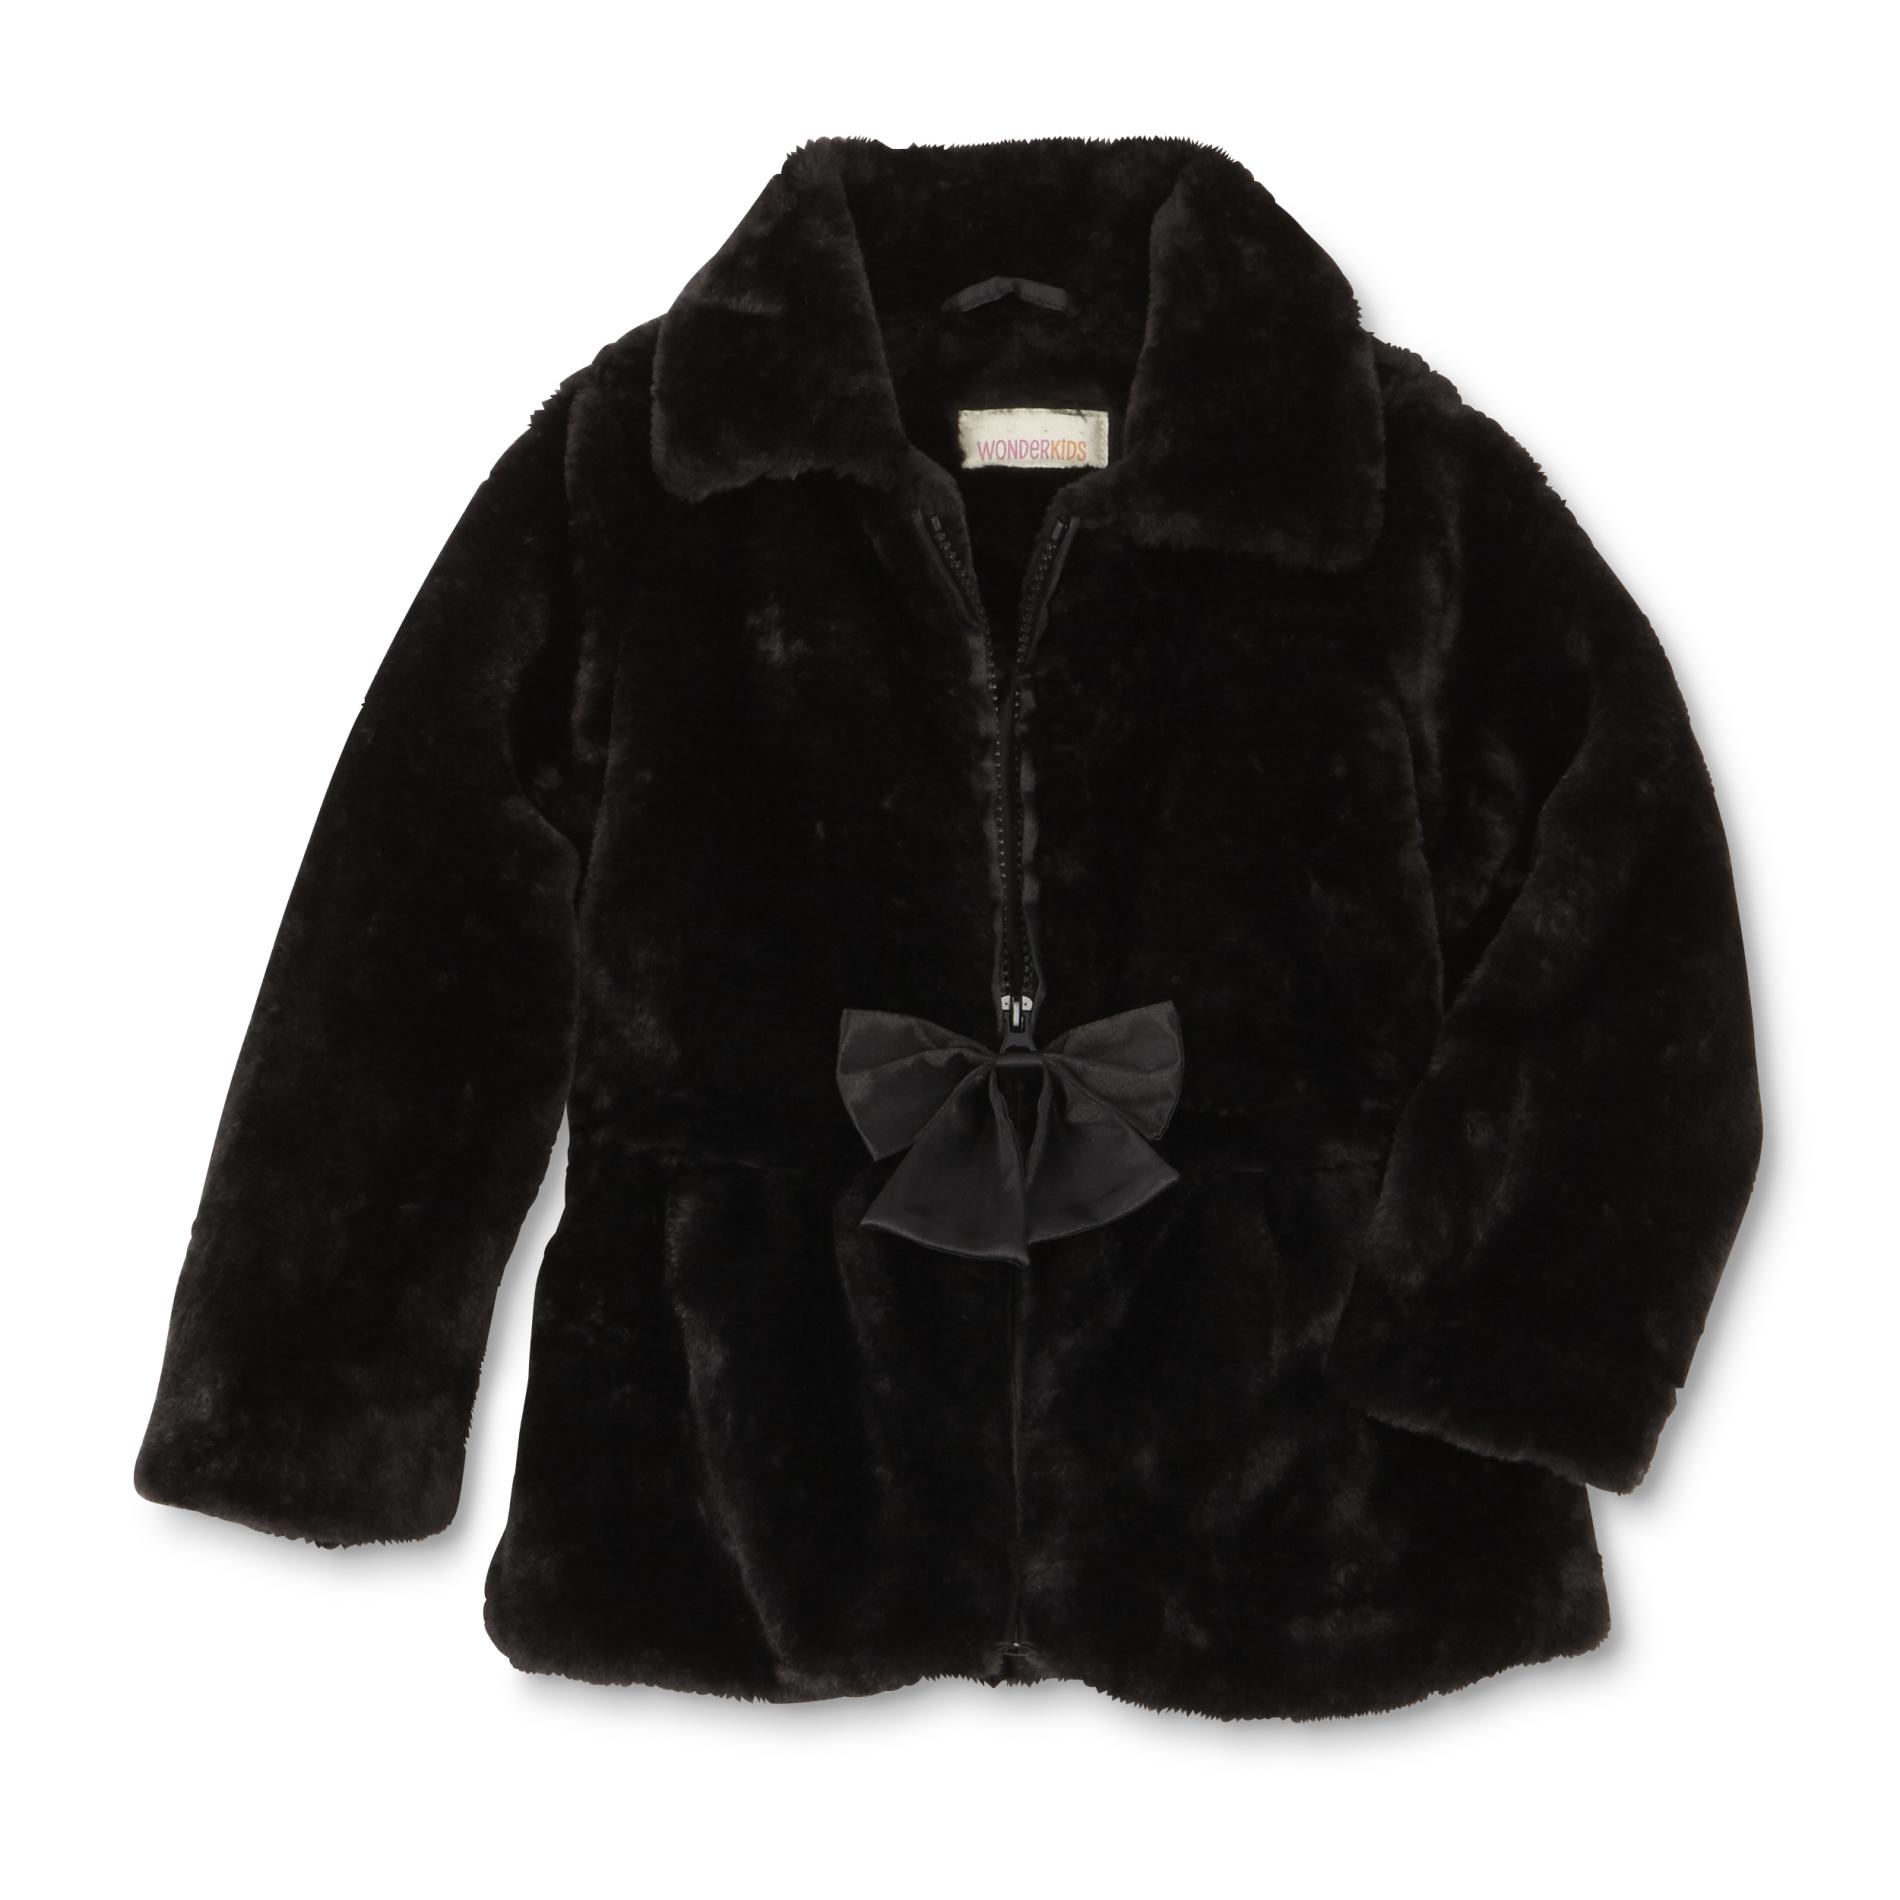 WonderKids Infant & Toddler Girl's Faux Fur Coat